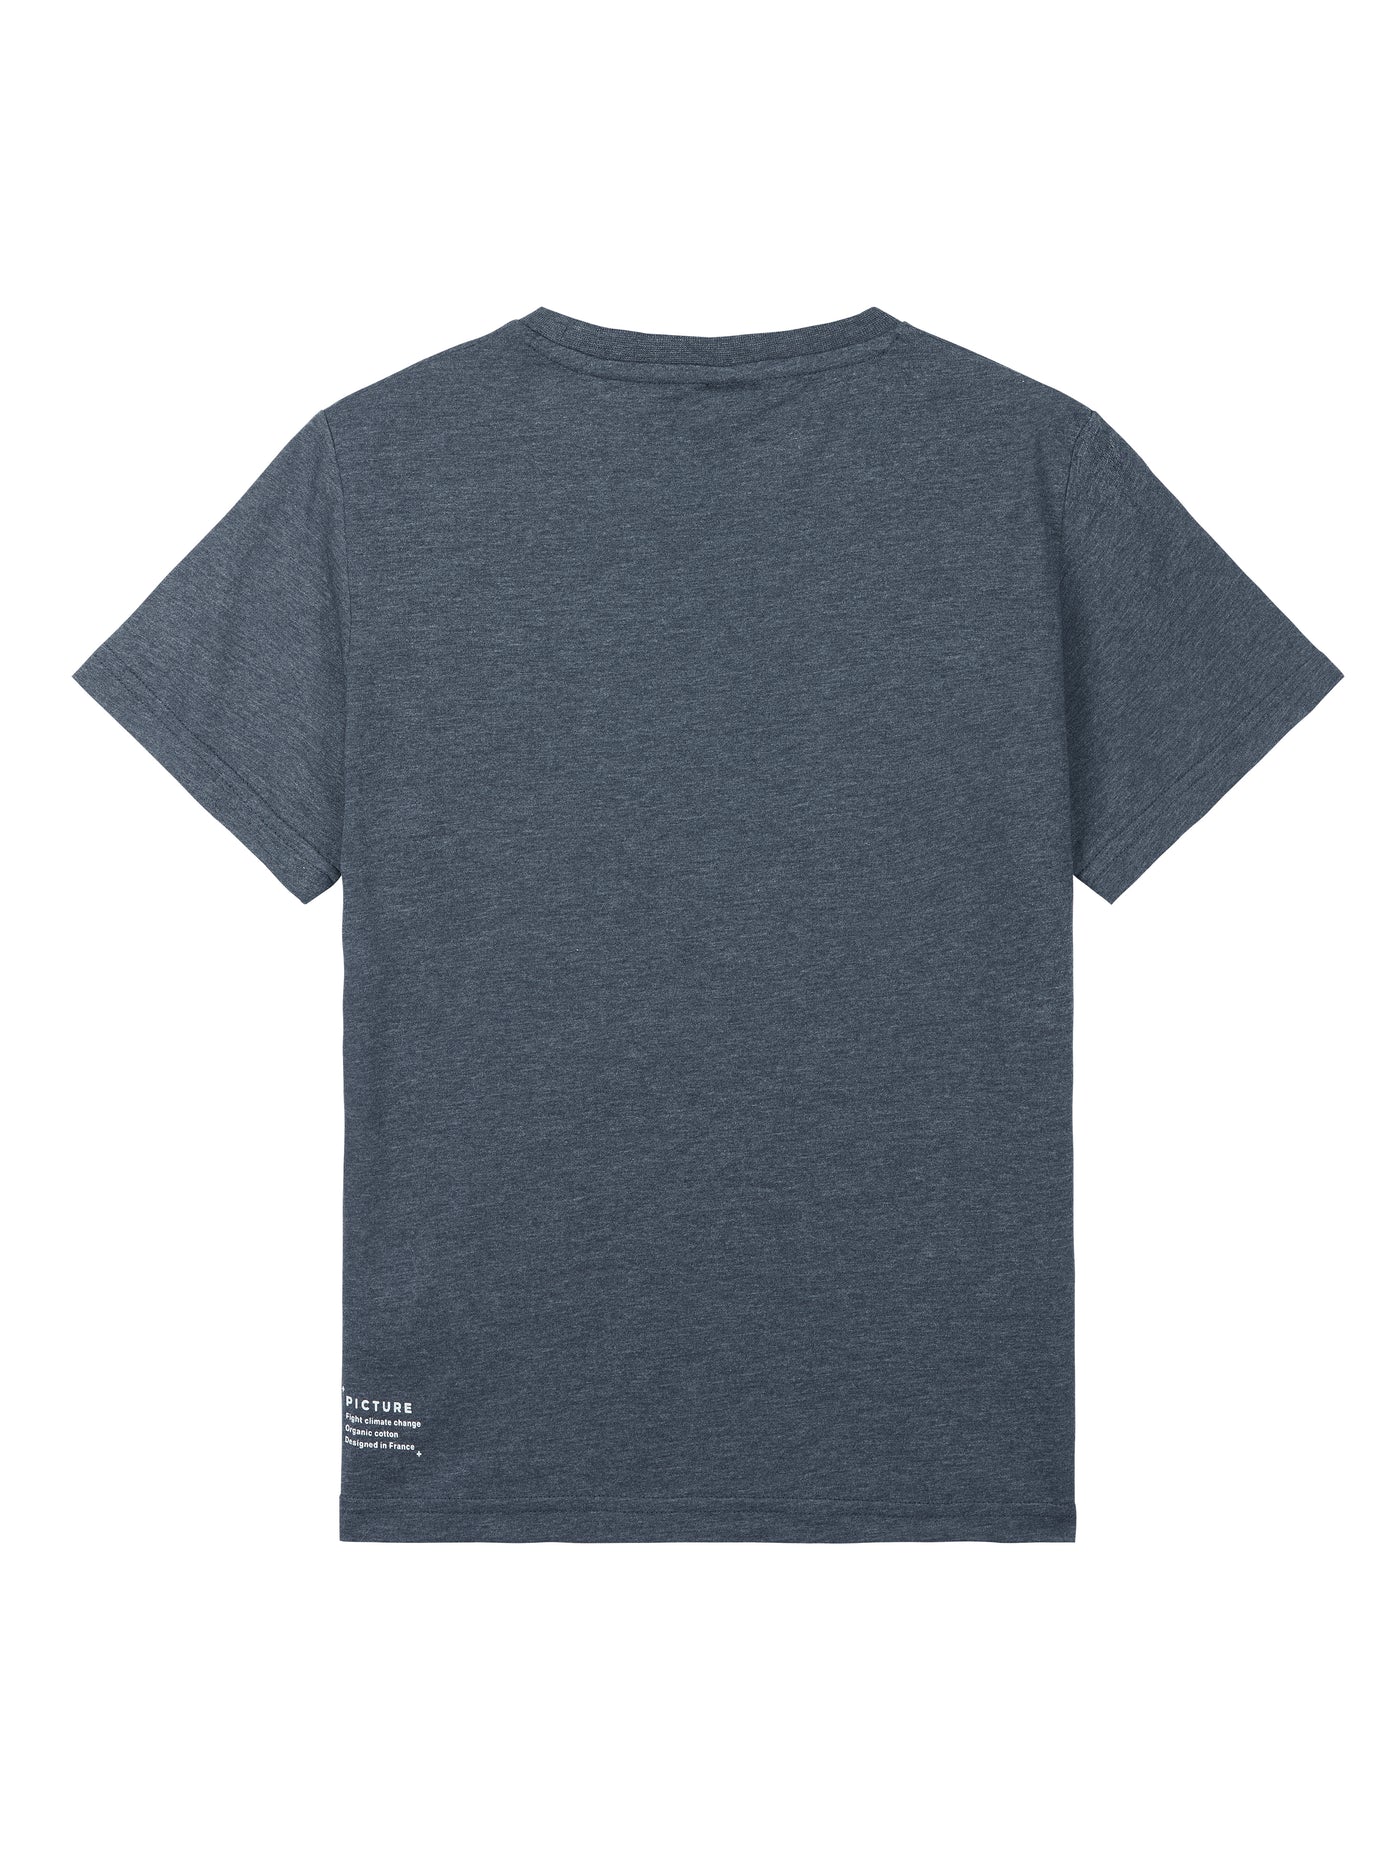 Basement Tee Boy - T-shirt for children and teenagers